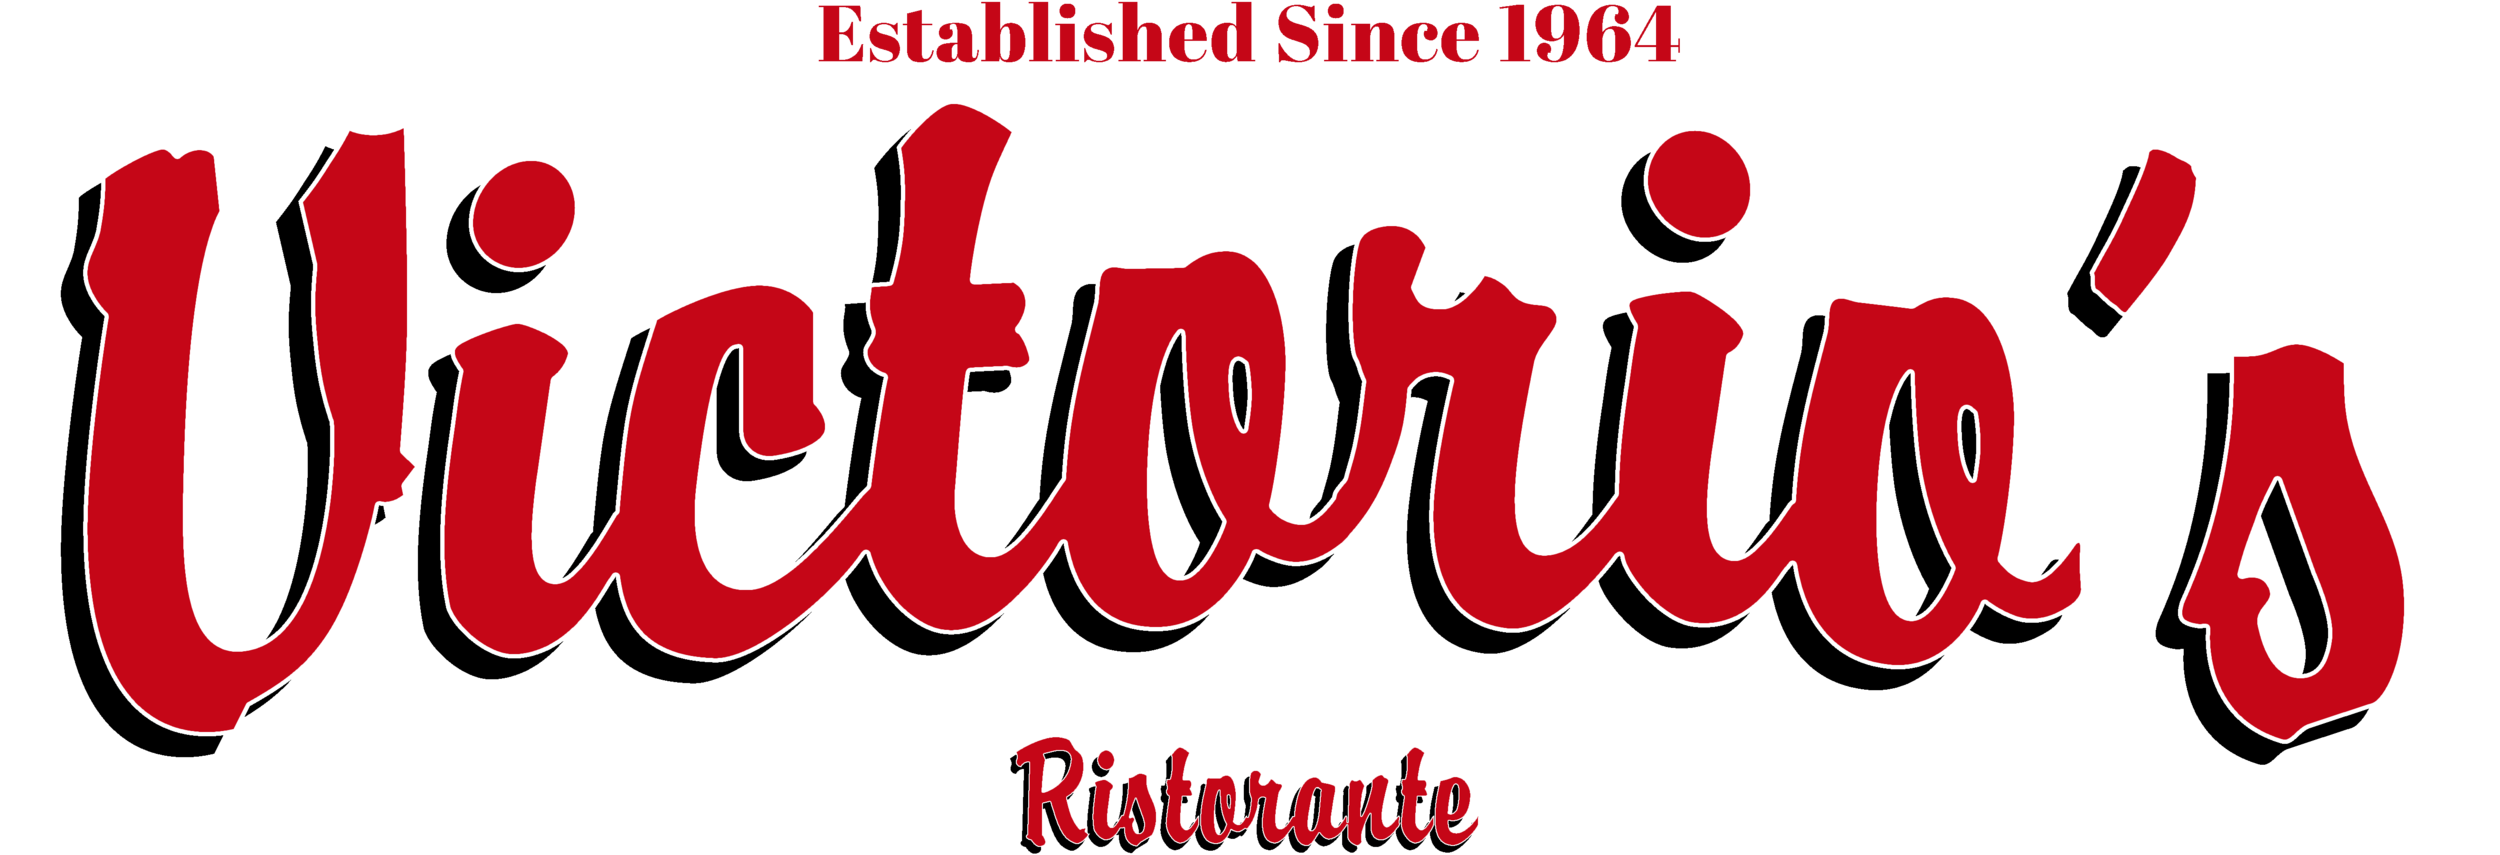 Victorios Ristorante & Catering Since 1964